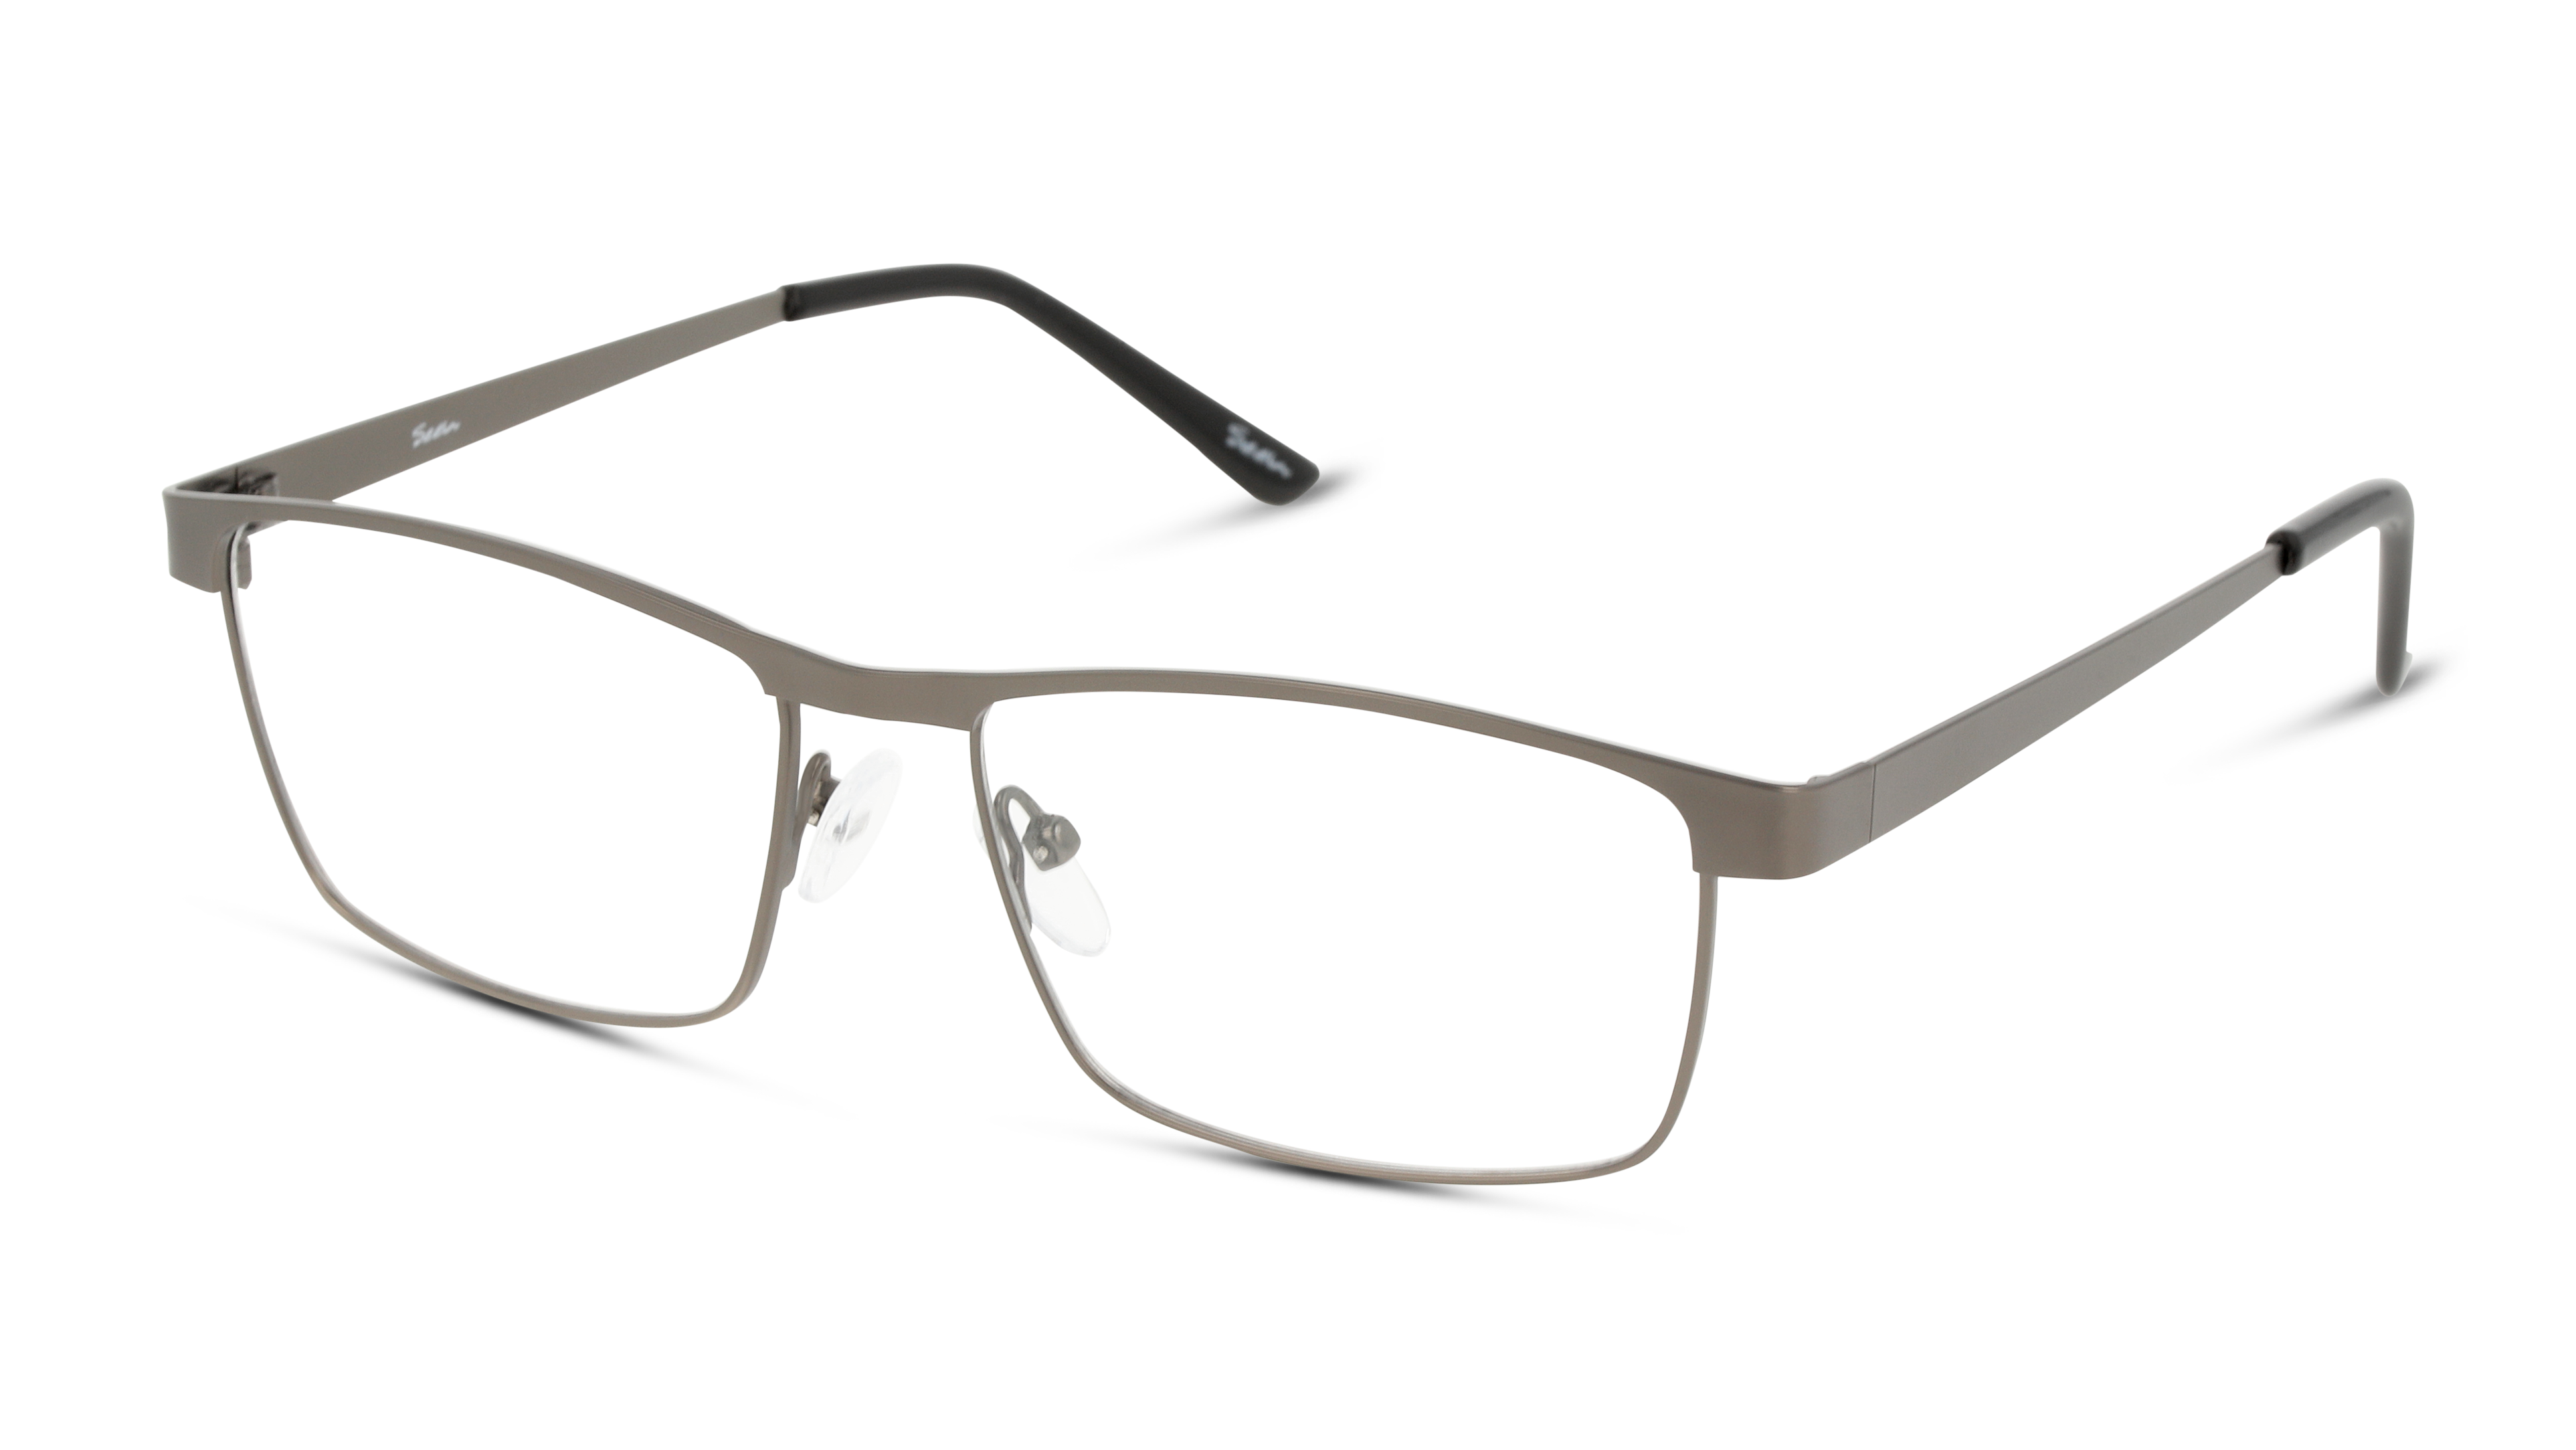 Angle_Left01 Seen SNOM5004 Glasses Transparent / Grey